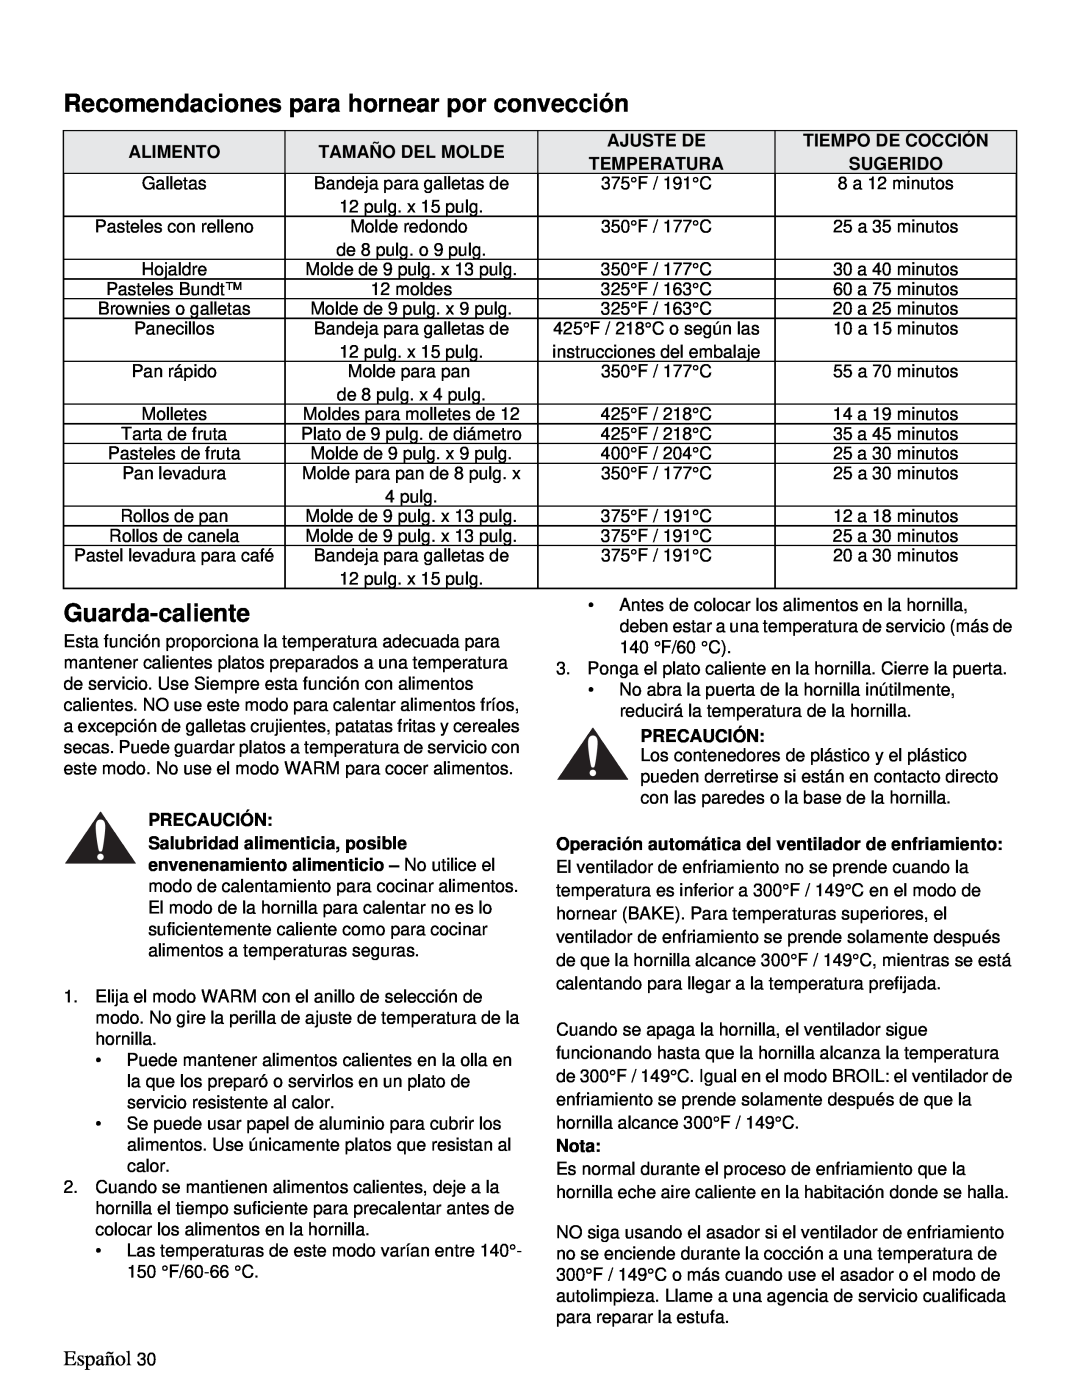 Thermador PRD48 Recomendaciones para hornear por convección, Guarda-caliente, Español, Alimento, Tamaño Del Molde, Nota 